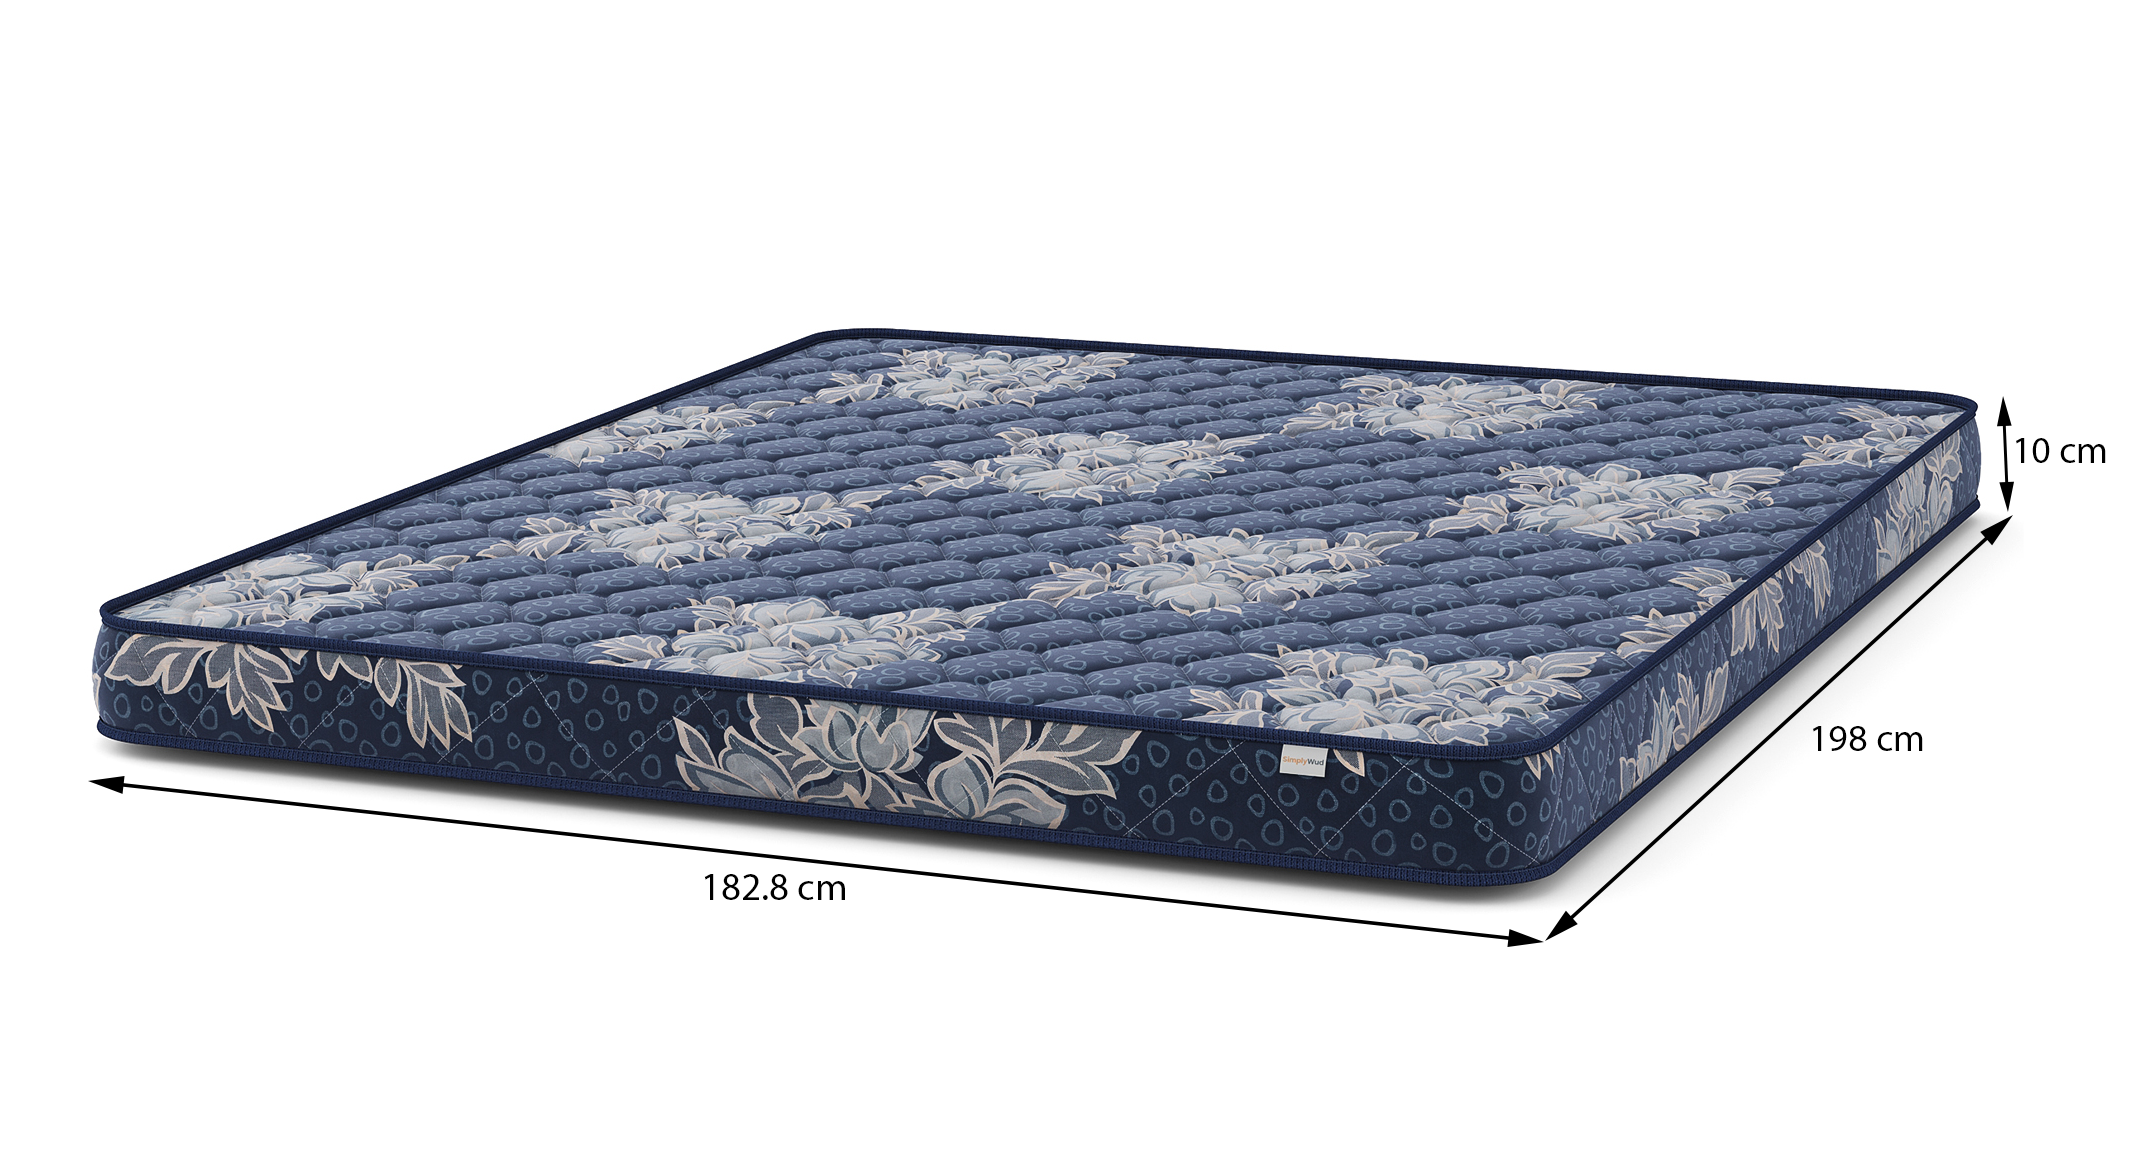 Simplywud basic coir mattress king 6